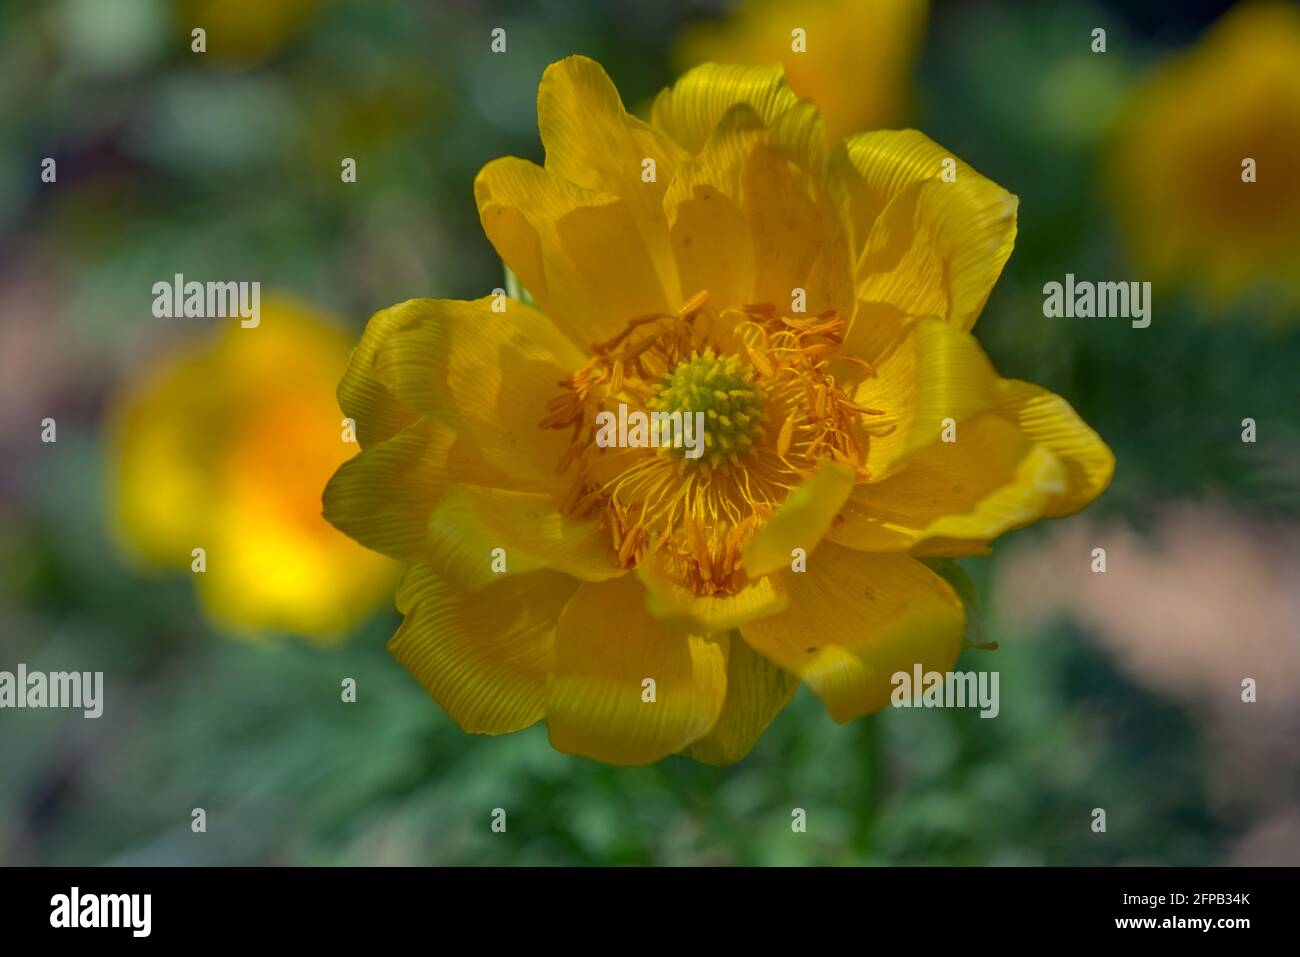 Blossom of False hellebore, Adonis vernalis medicinal herb - selective focus. Adonis spring flower on blurred green background Stock Photo